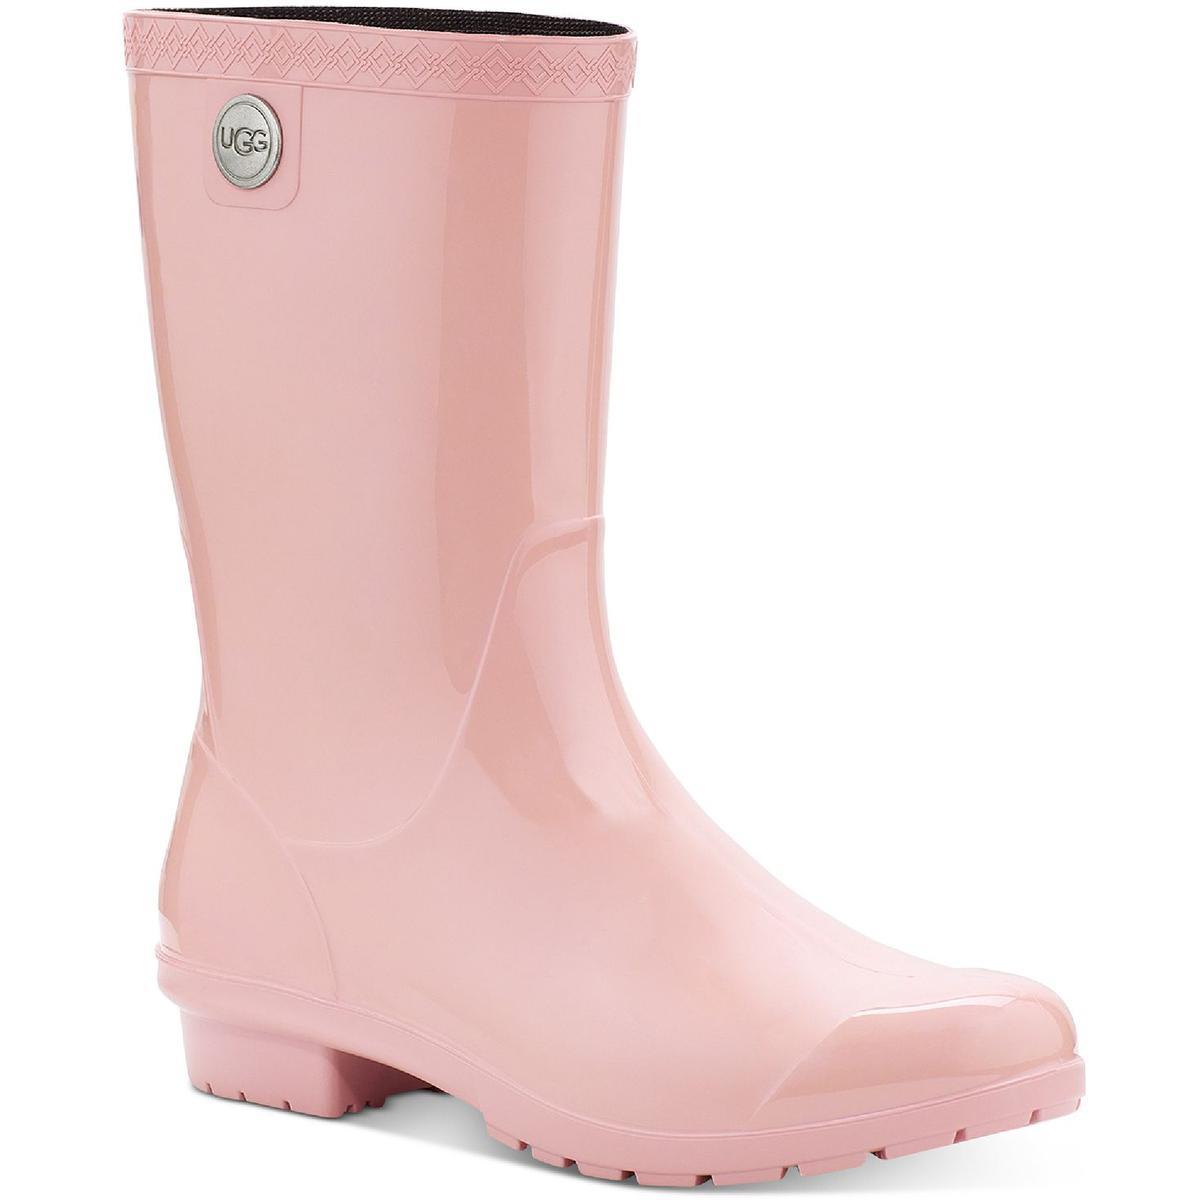 Ugg Womens Sienna Rubber Mid-calf Fashion Rain Boots Shoes Bhfo 9123 Shell